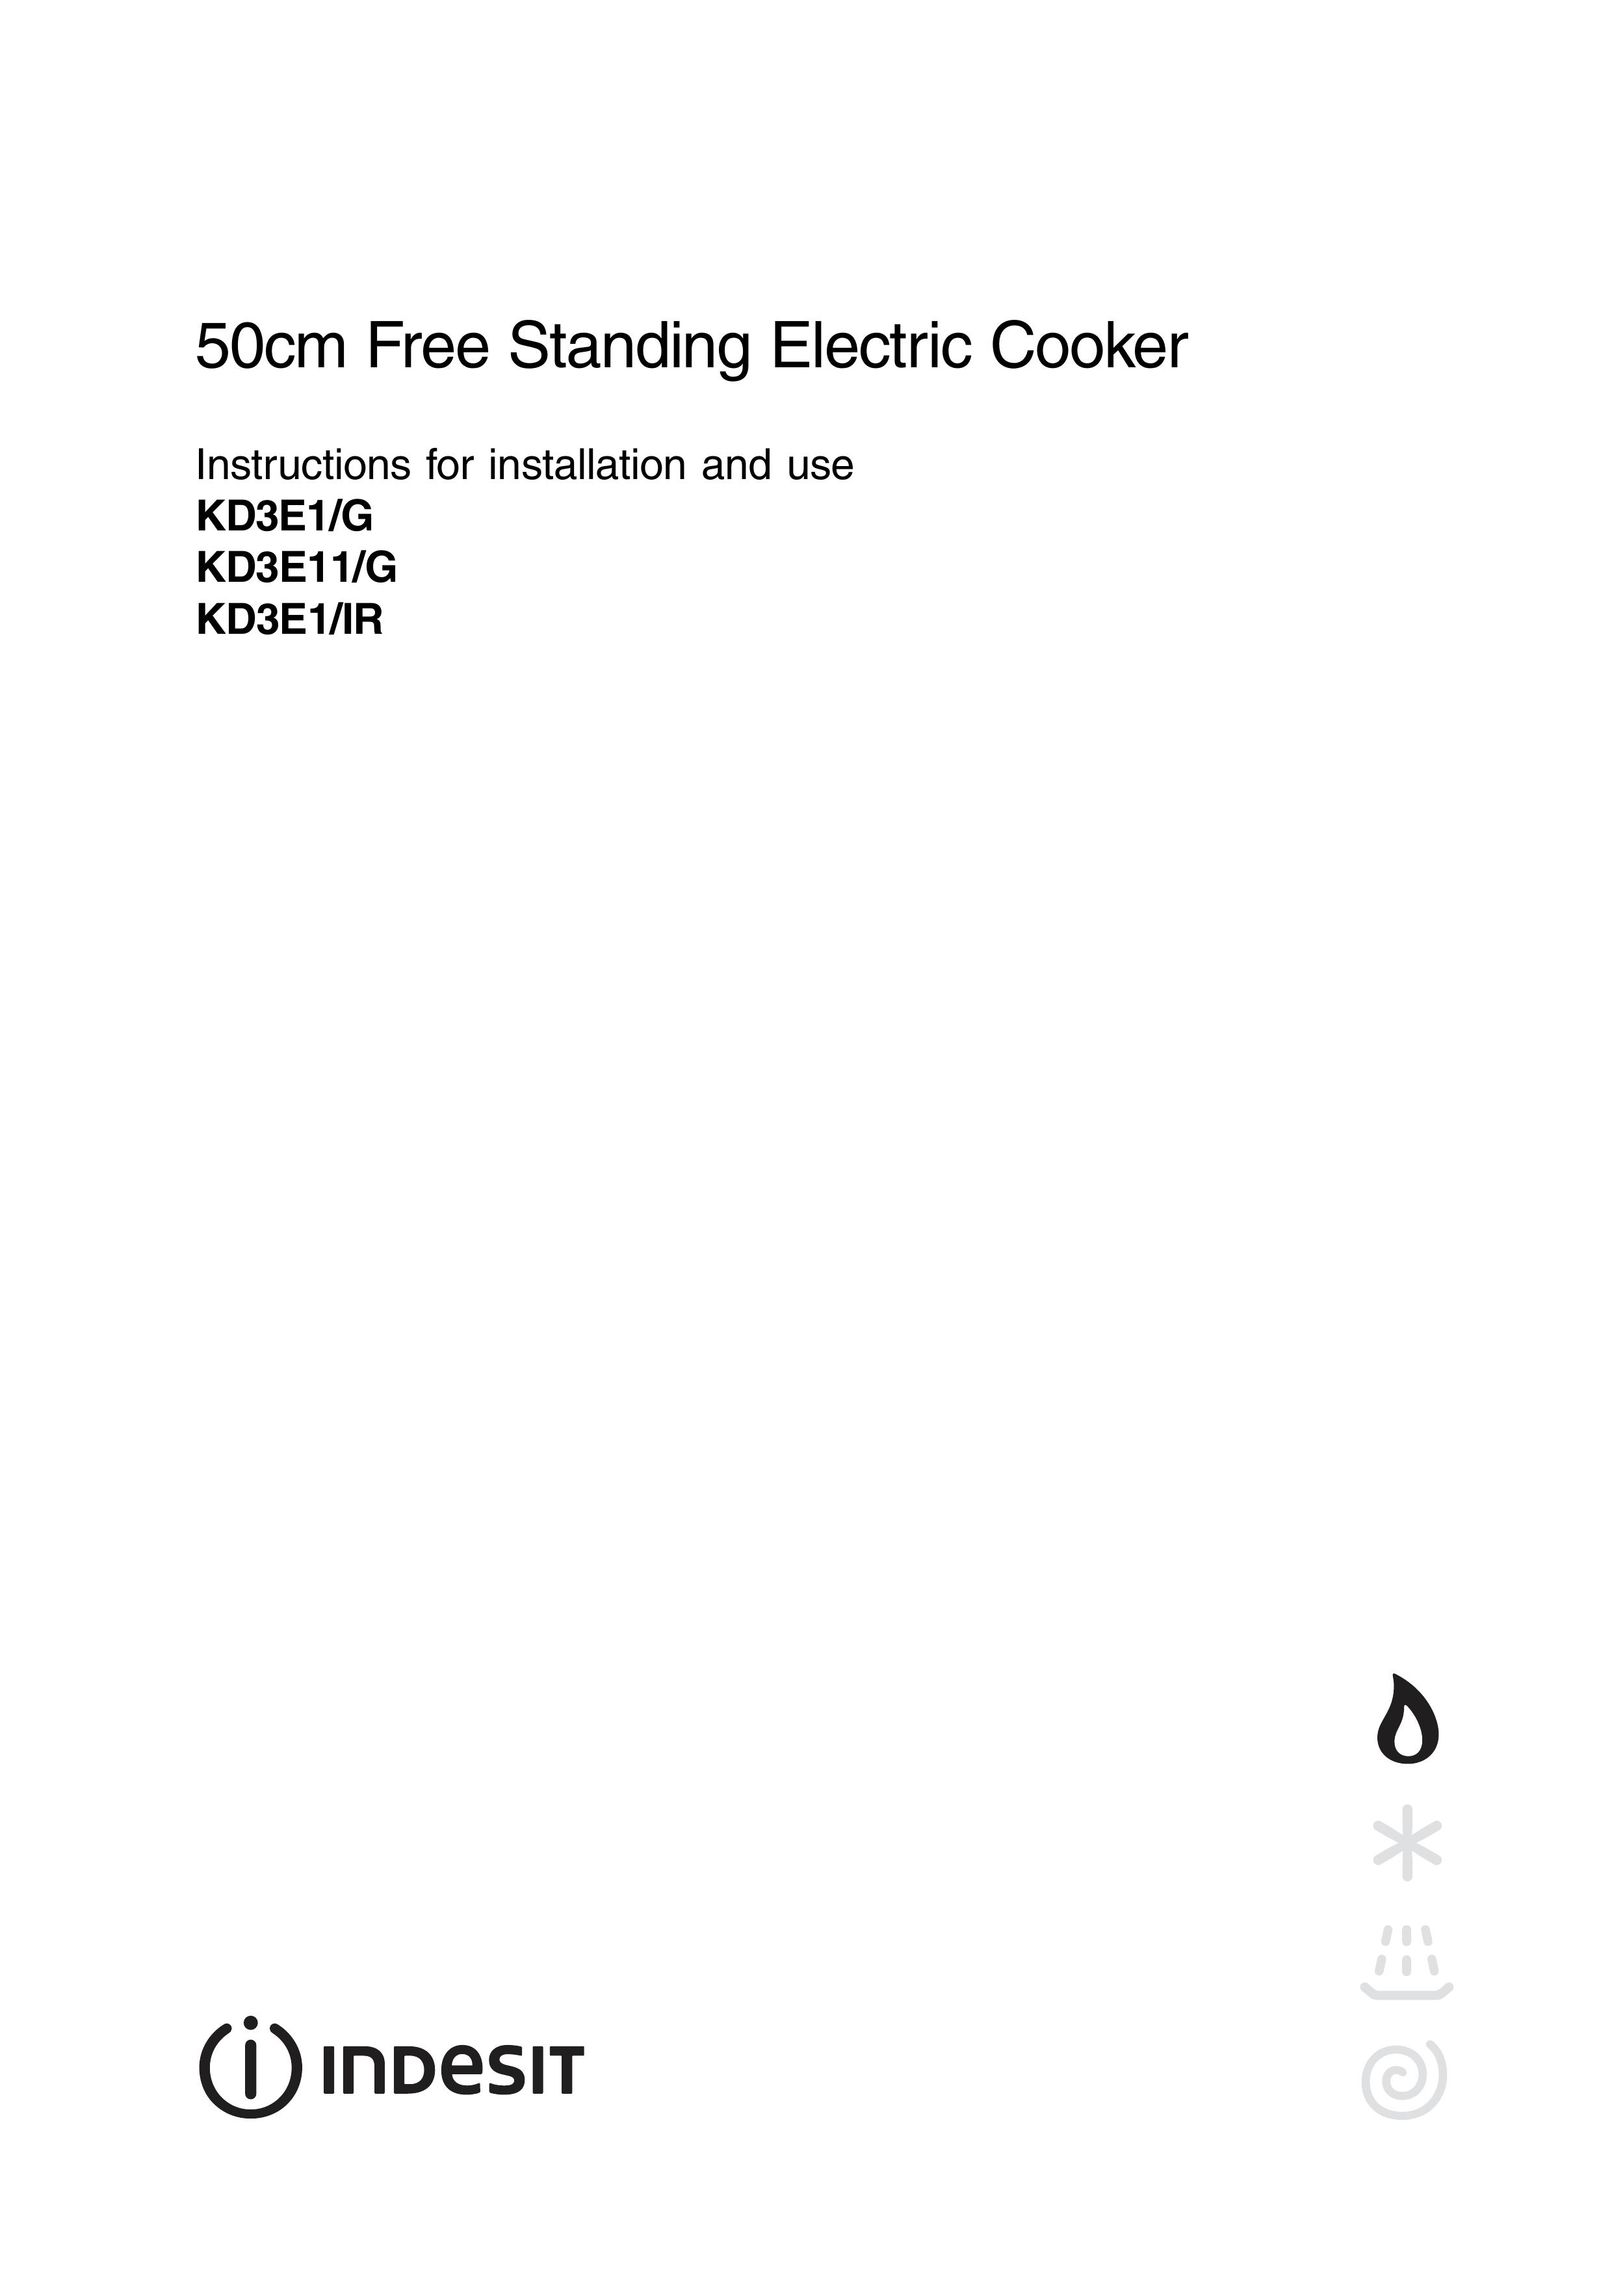 Indesit KD3E1/G Electric Pressure Cooker User Manual